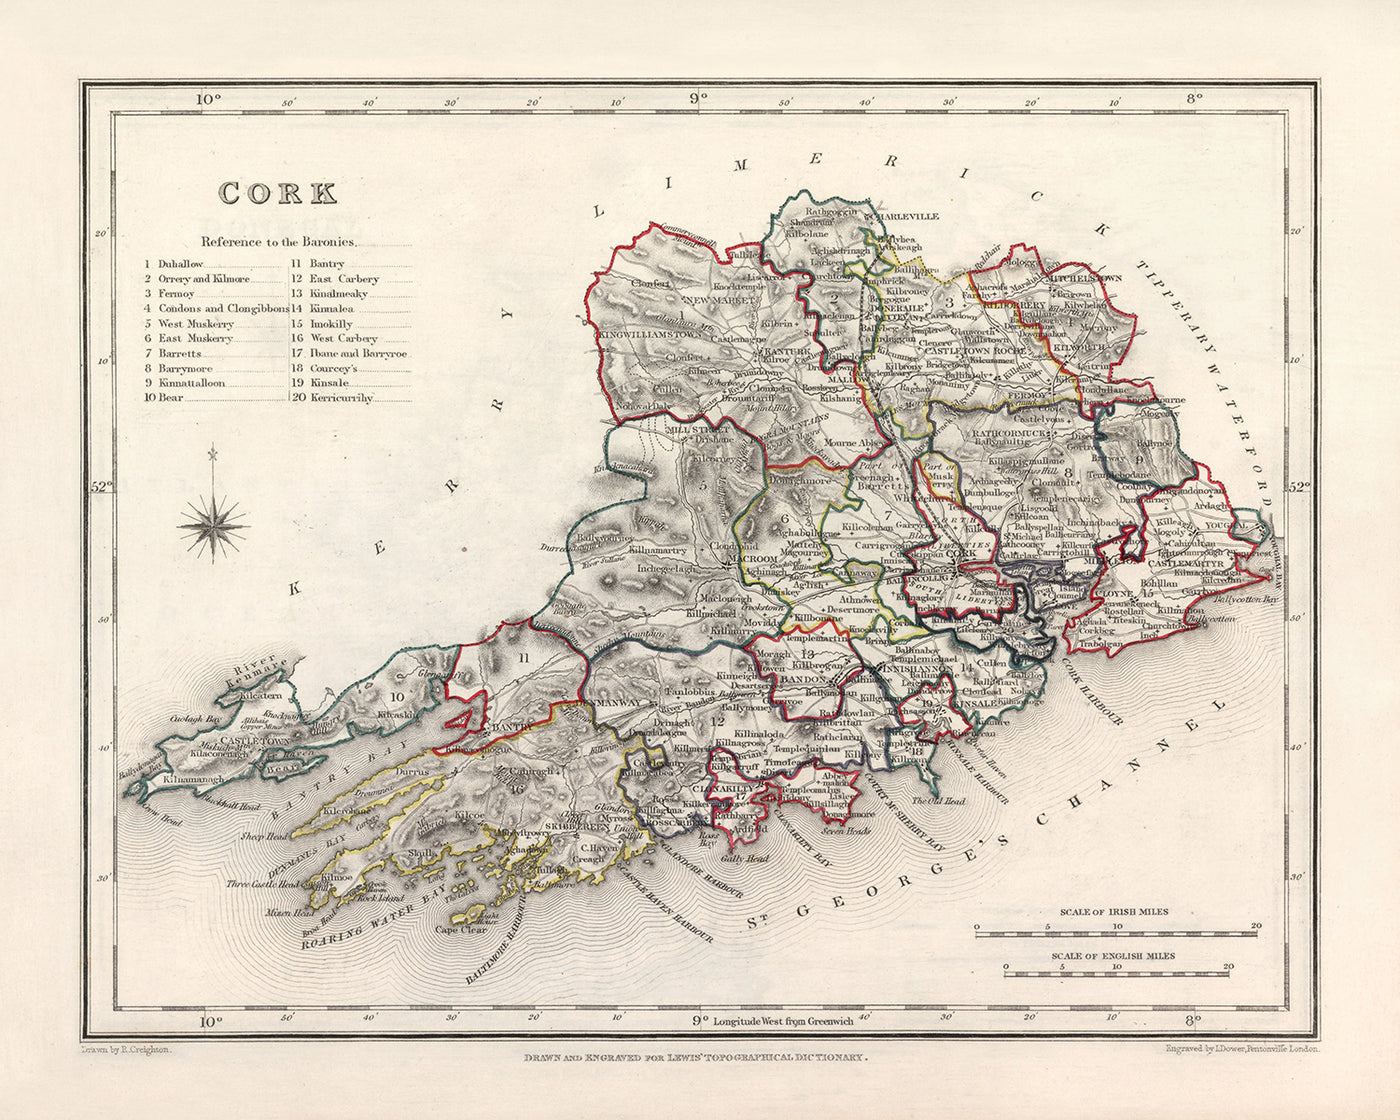 Old Map of County Cork by Samuel Lewis, 1844: Cobh, Kinsale, Blarney Castle, Fota House, Mizen Head